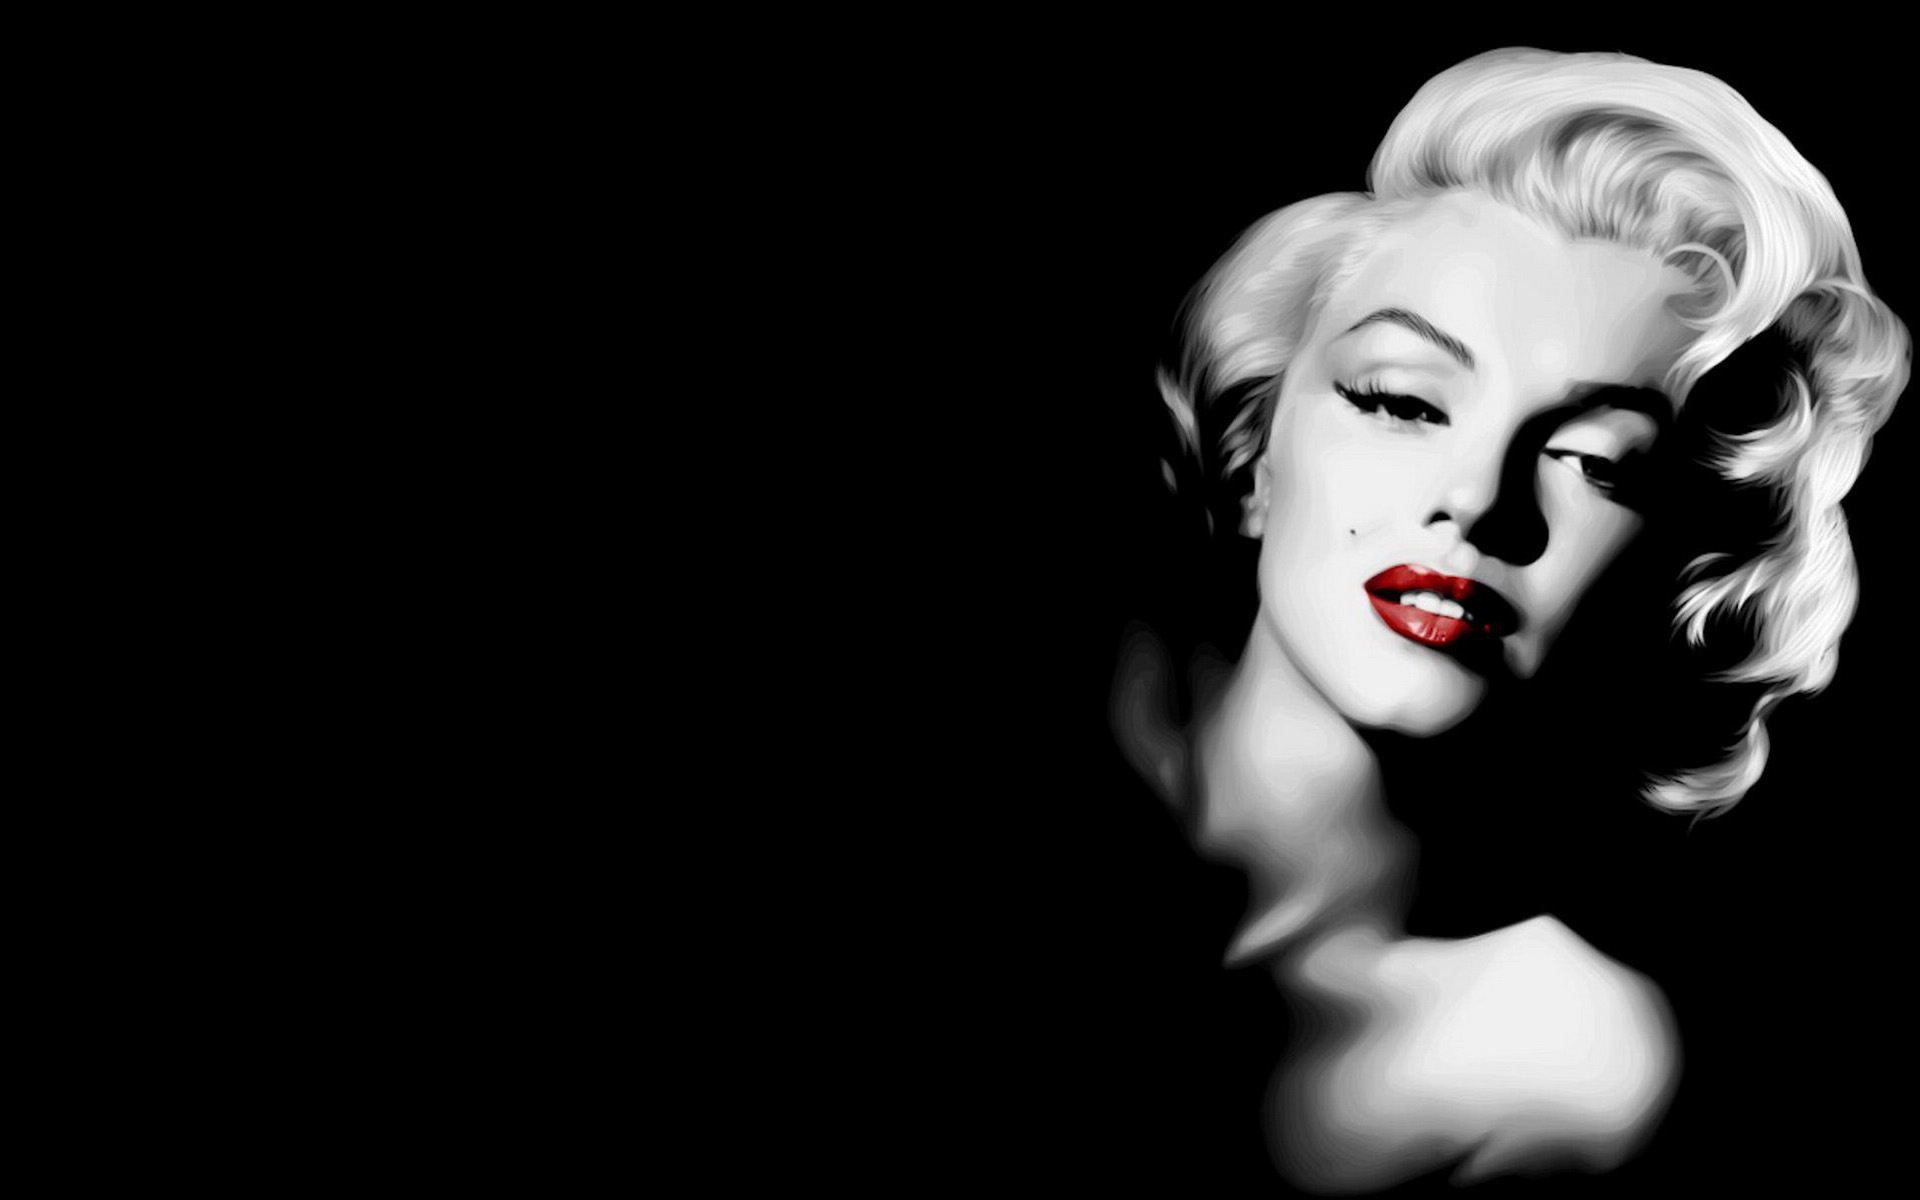 Artistic Marilyn Monroe Cool Background